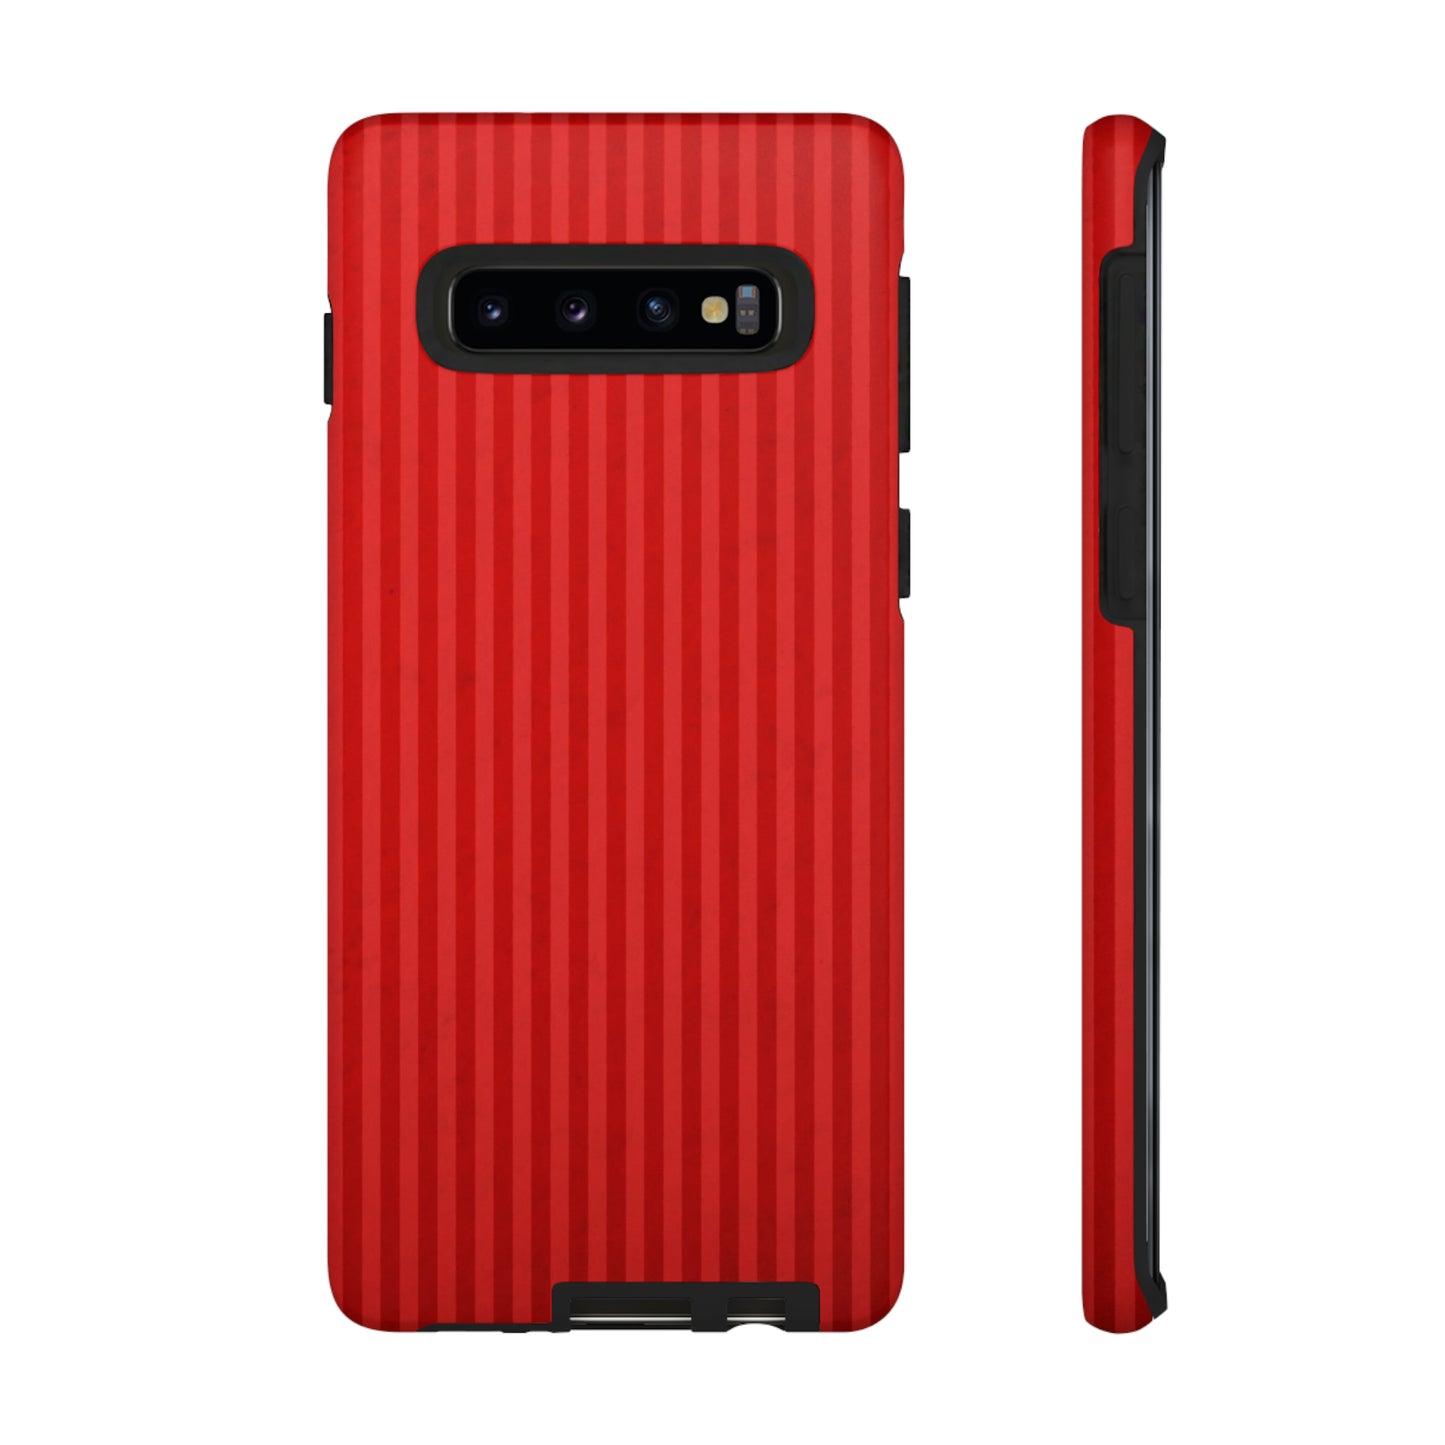 Stripe Red Only / Samsung Case